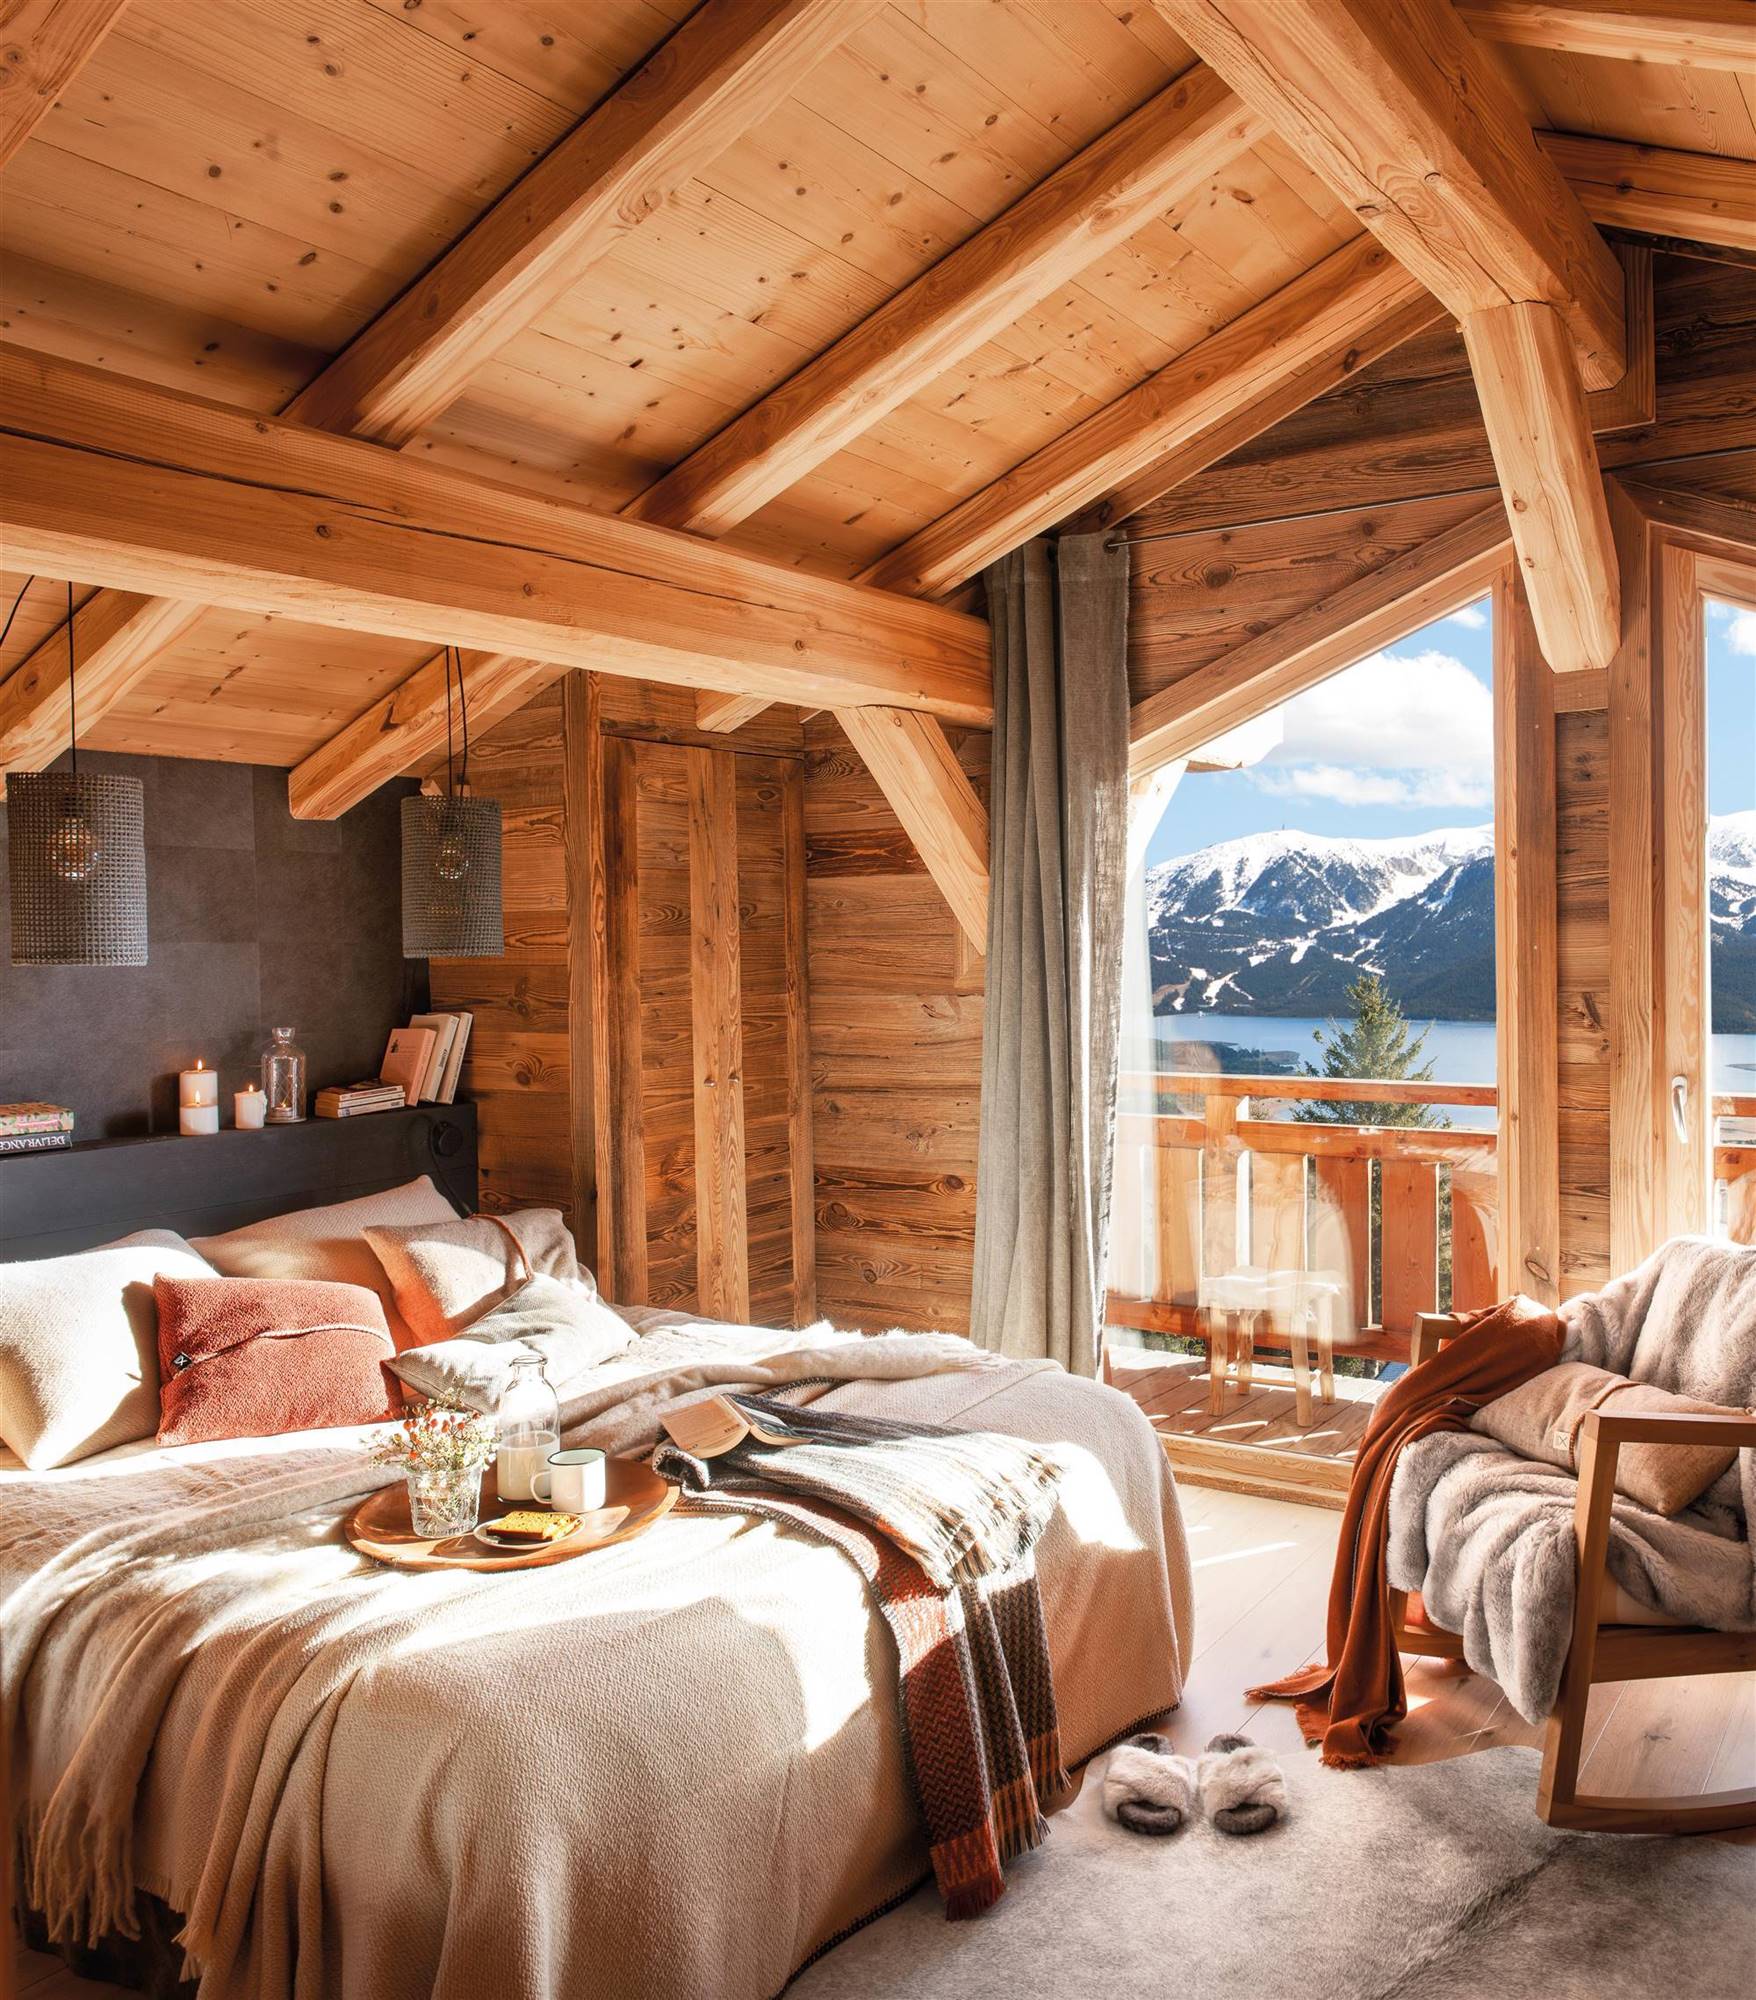 Dormitorio revestido de madera en casa de montaña con vistas a las montañas nevadas_00519484